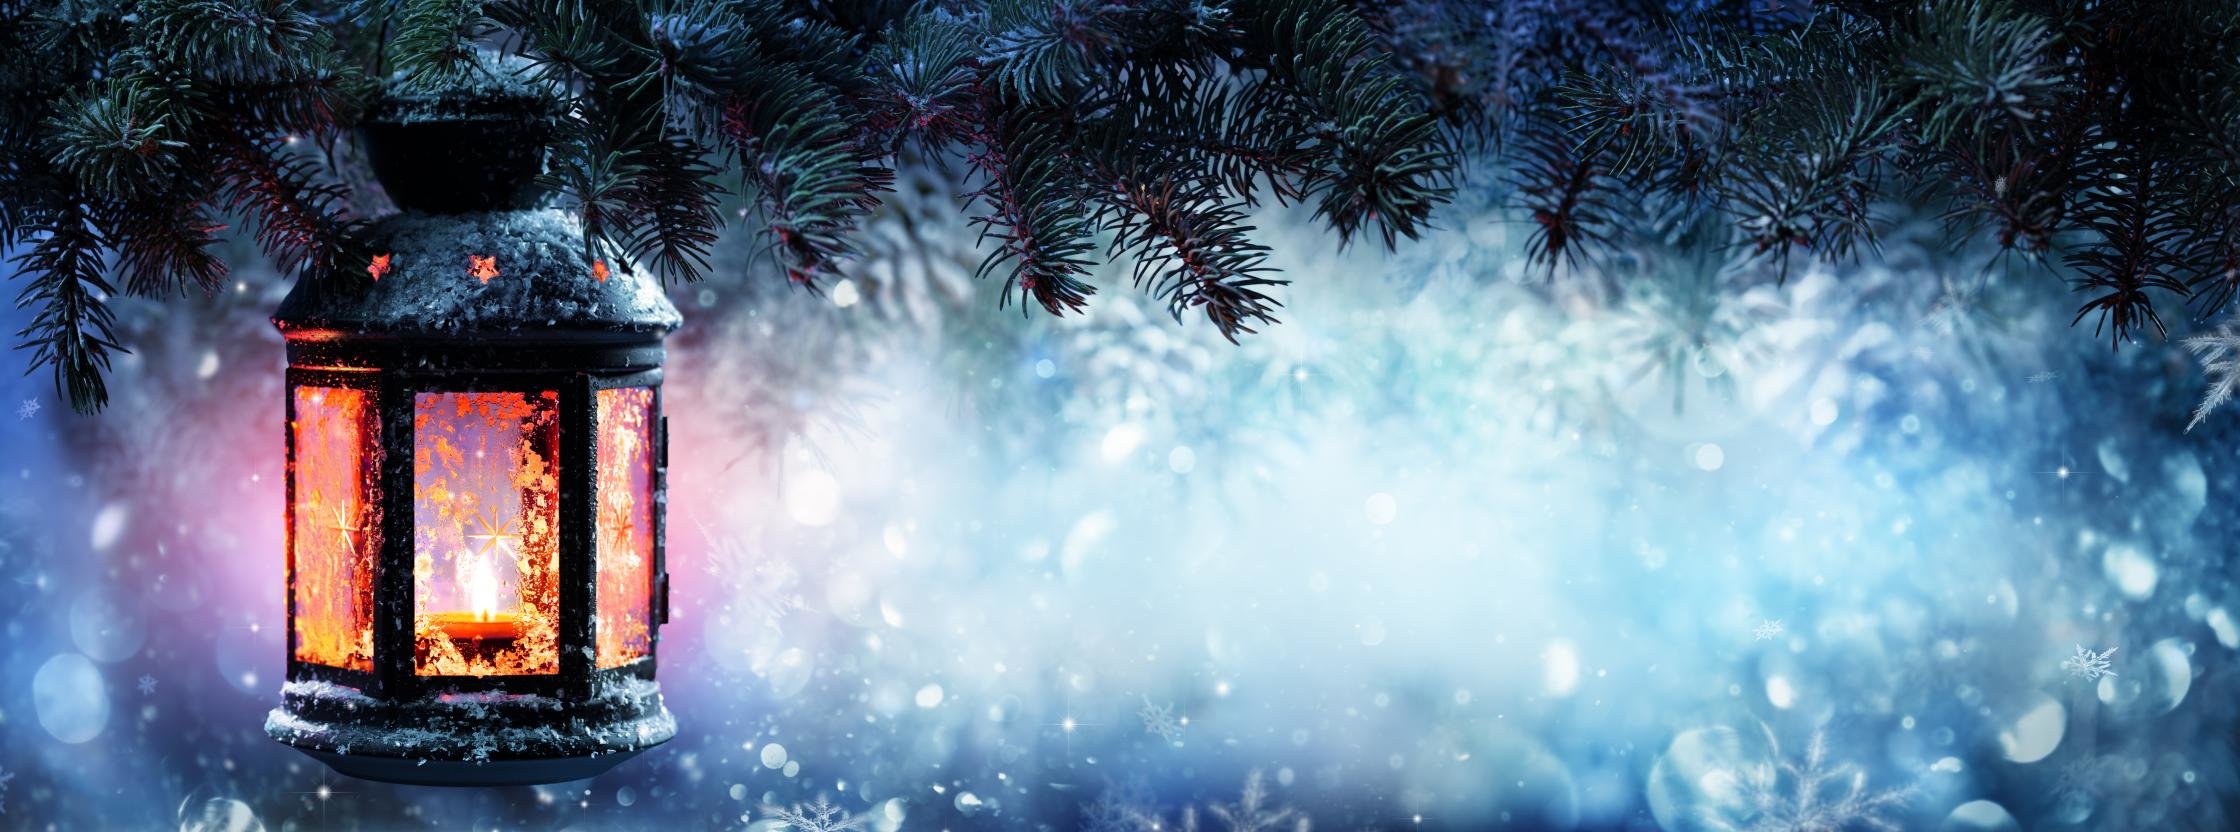 dual monitor christmas wallpaper,blue,sky,winter,tree,atmosphere